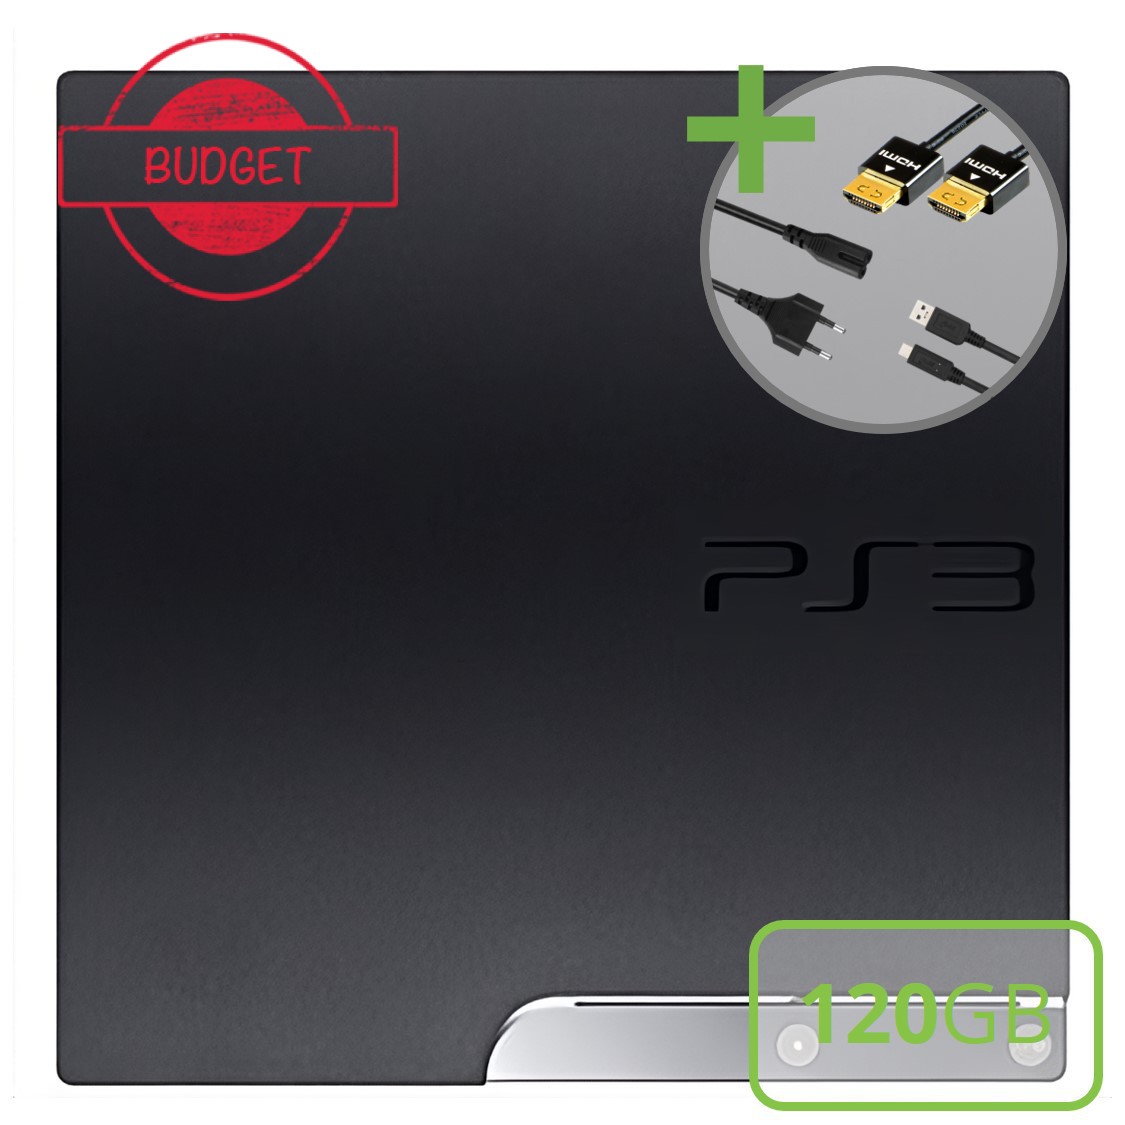 Sony PlayStation 3 Slim (120GB) Starter Pack - DualShock Edition - Budget - Playstation 3 Hardware - 3